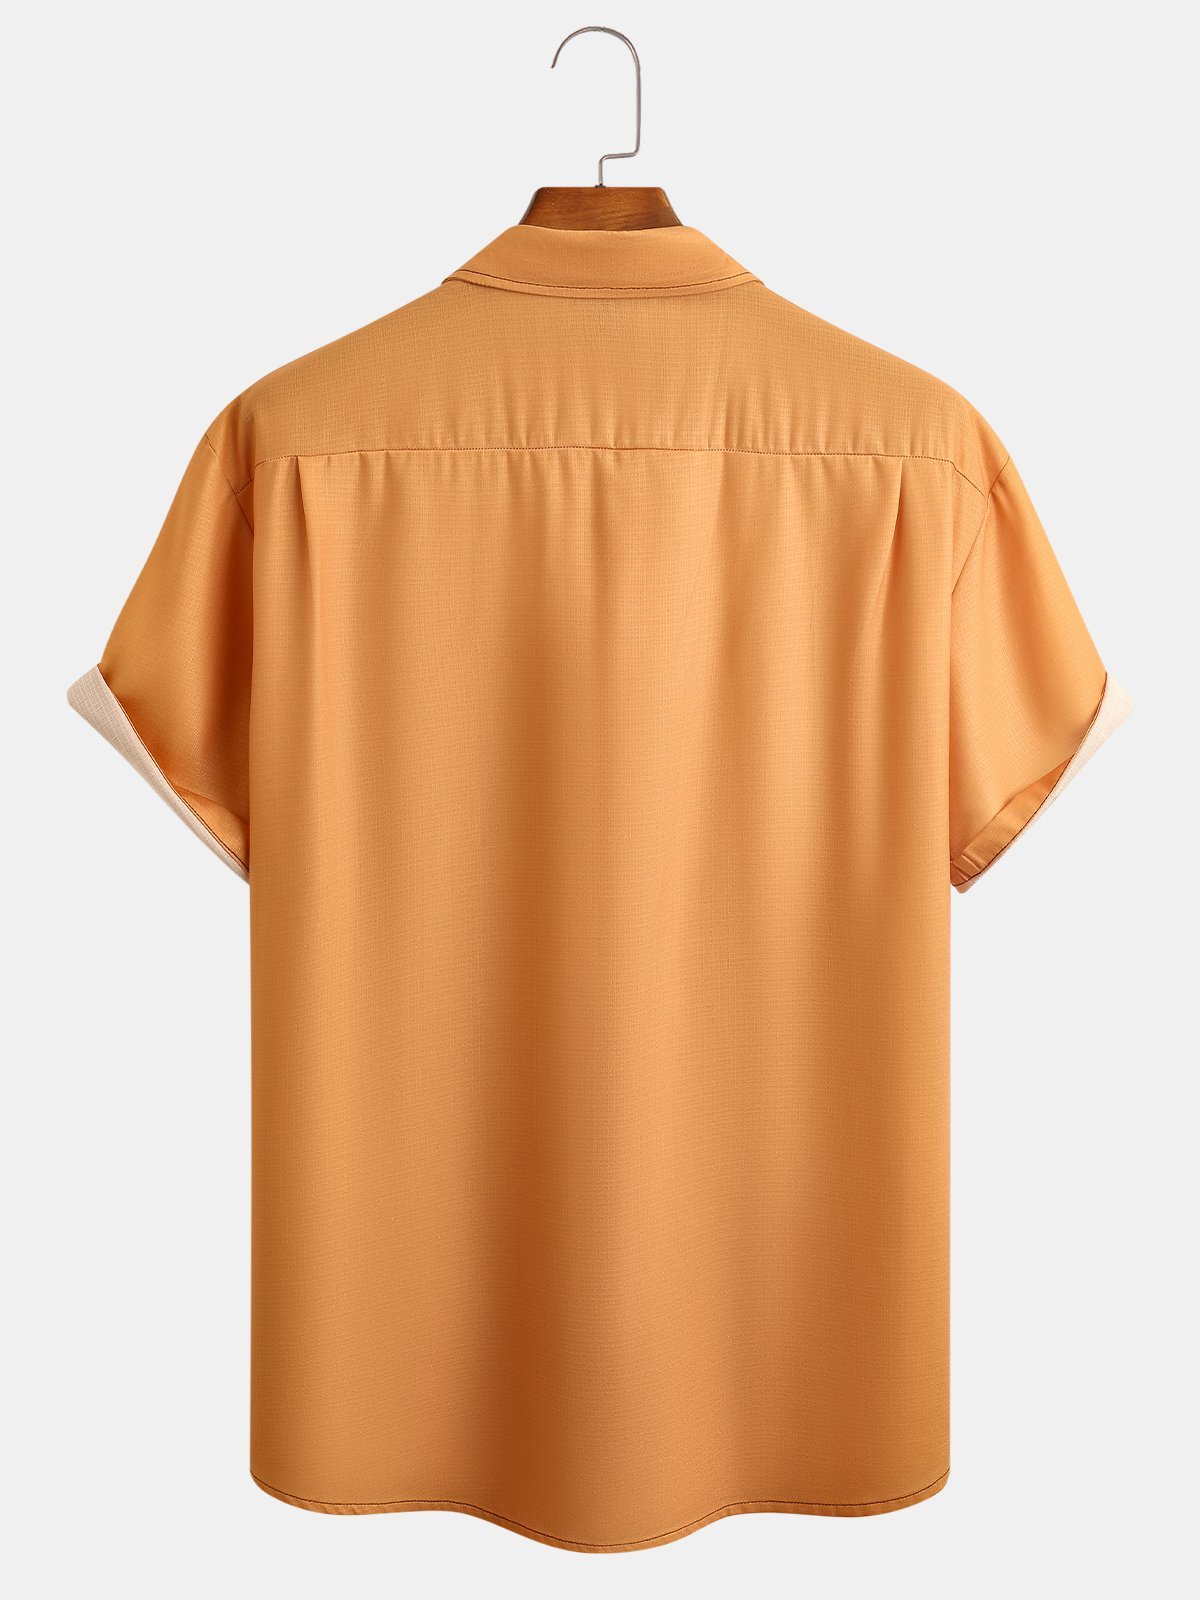 Big Size Stripe Chest Pocket Short Sleeve Casual Guayabera Shirt